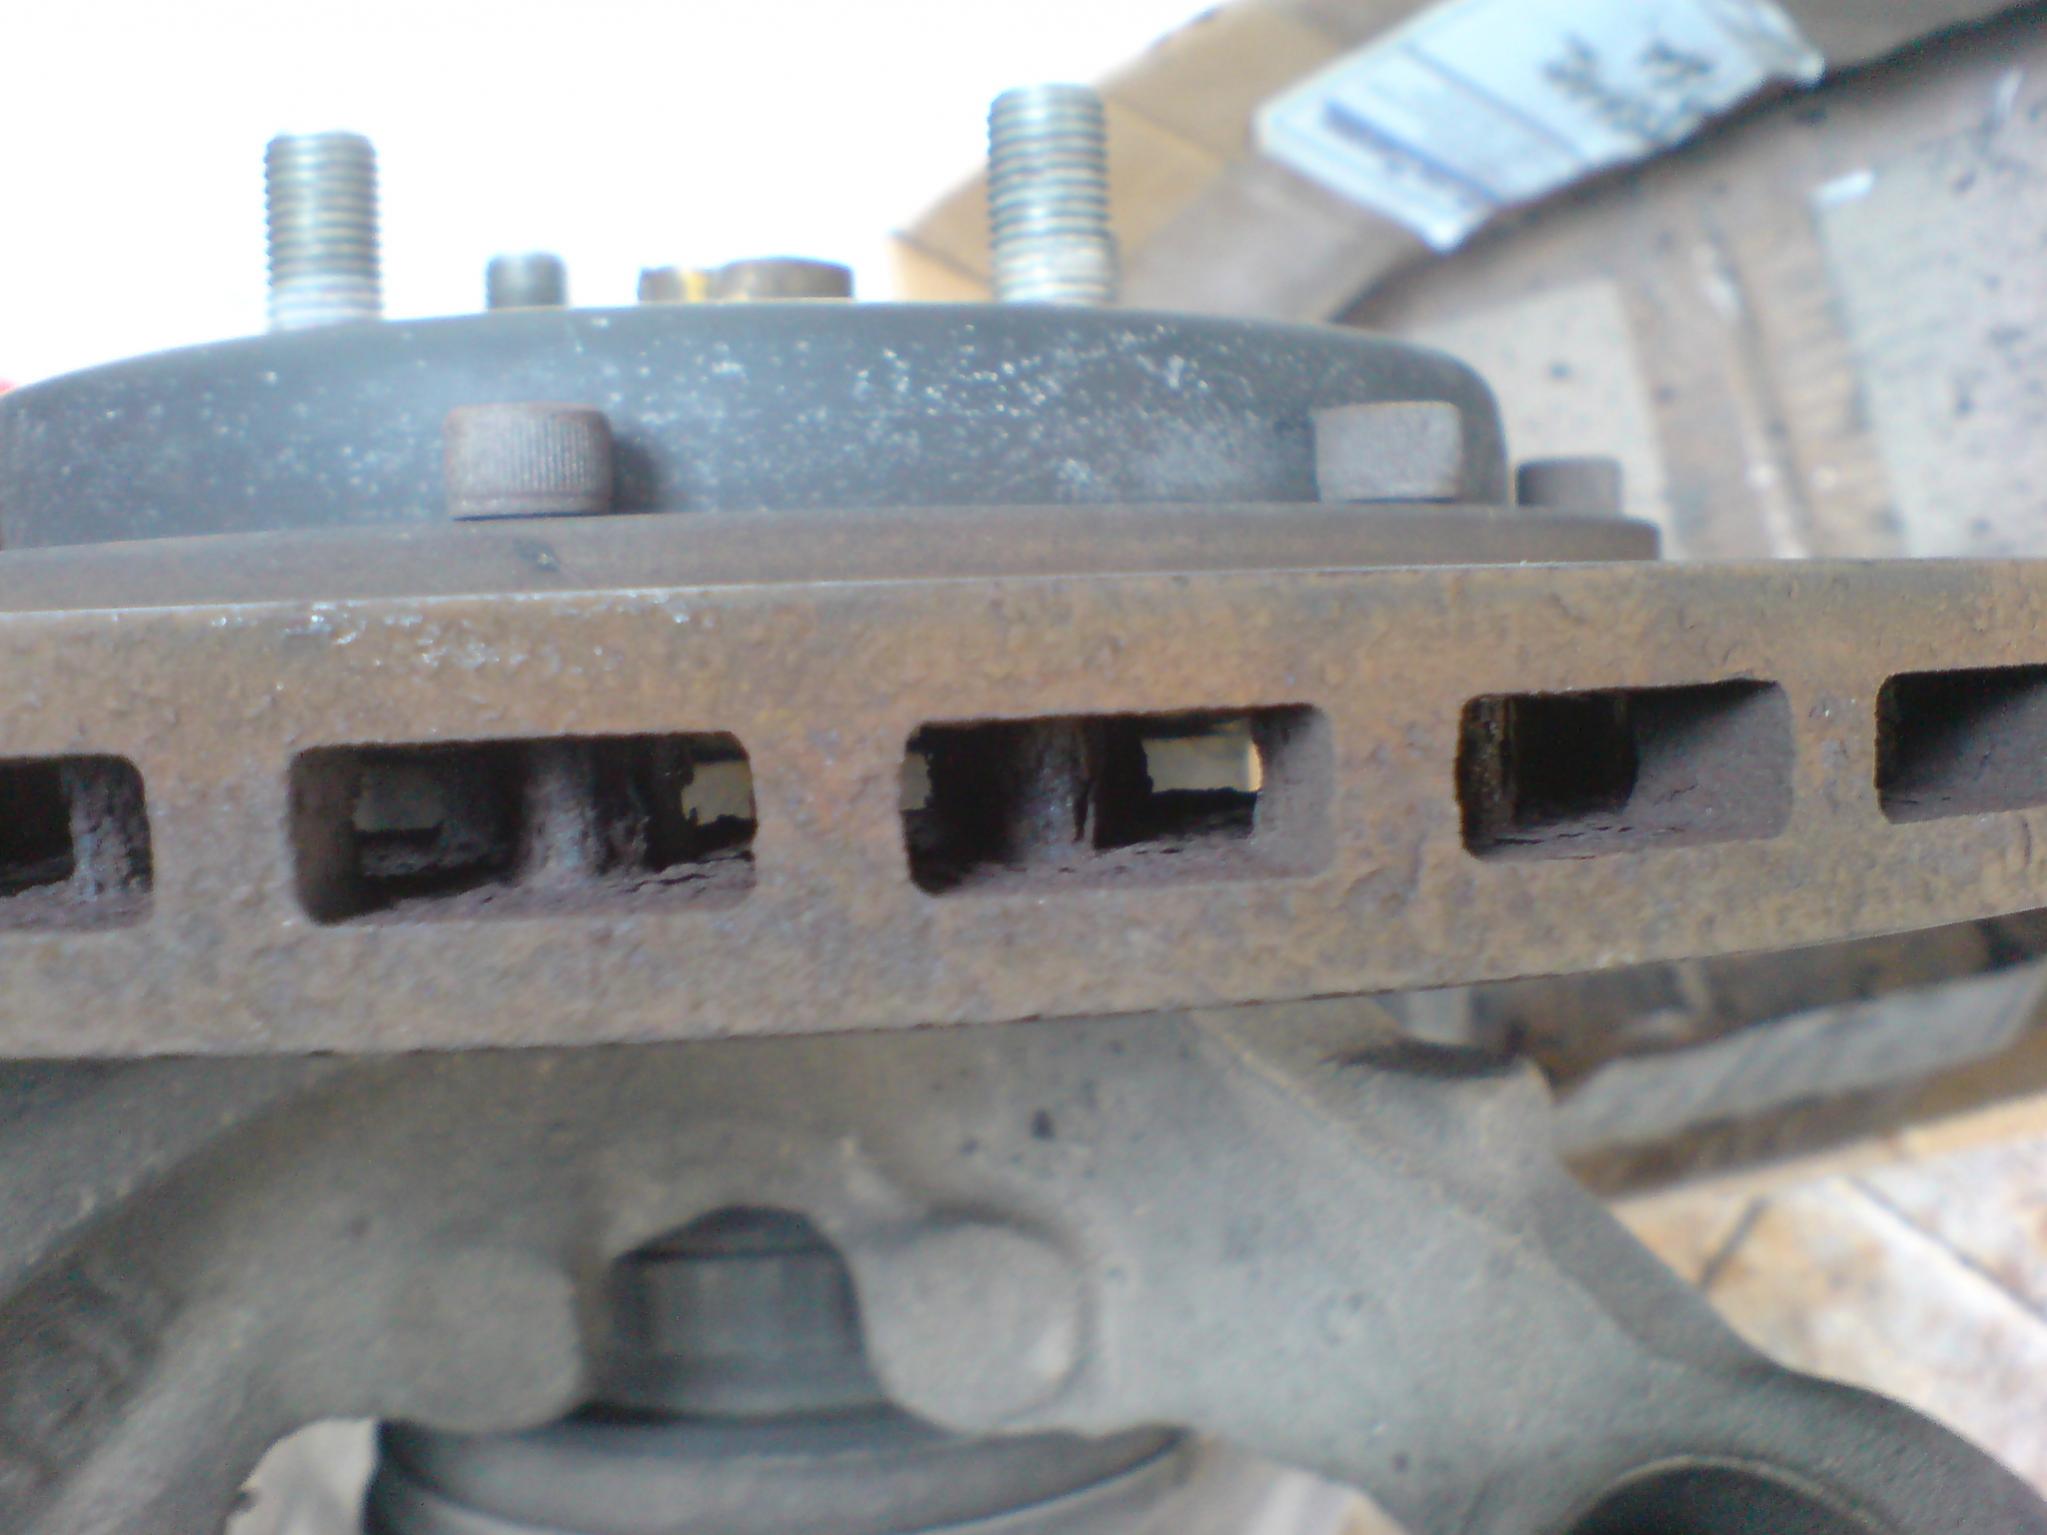 10205d1282314169-replacing-aem-big-brake-kit-rotors-brembo-rotors-need-help-dsc00847.jpg